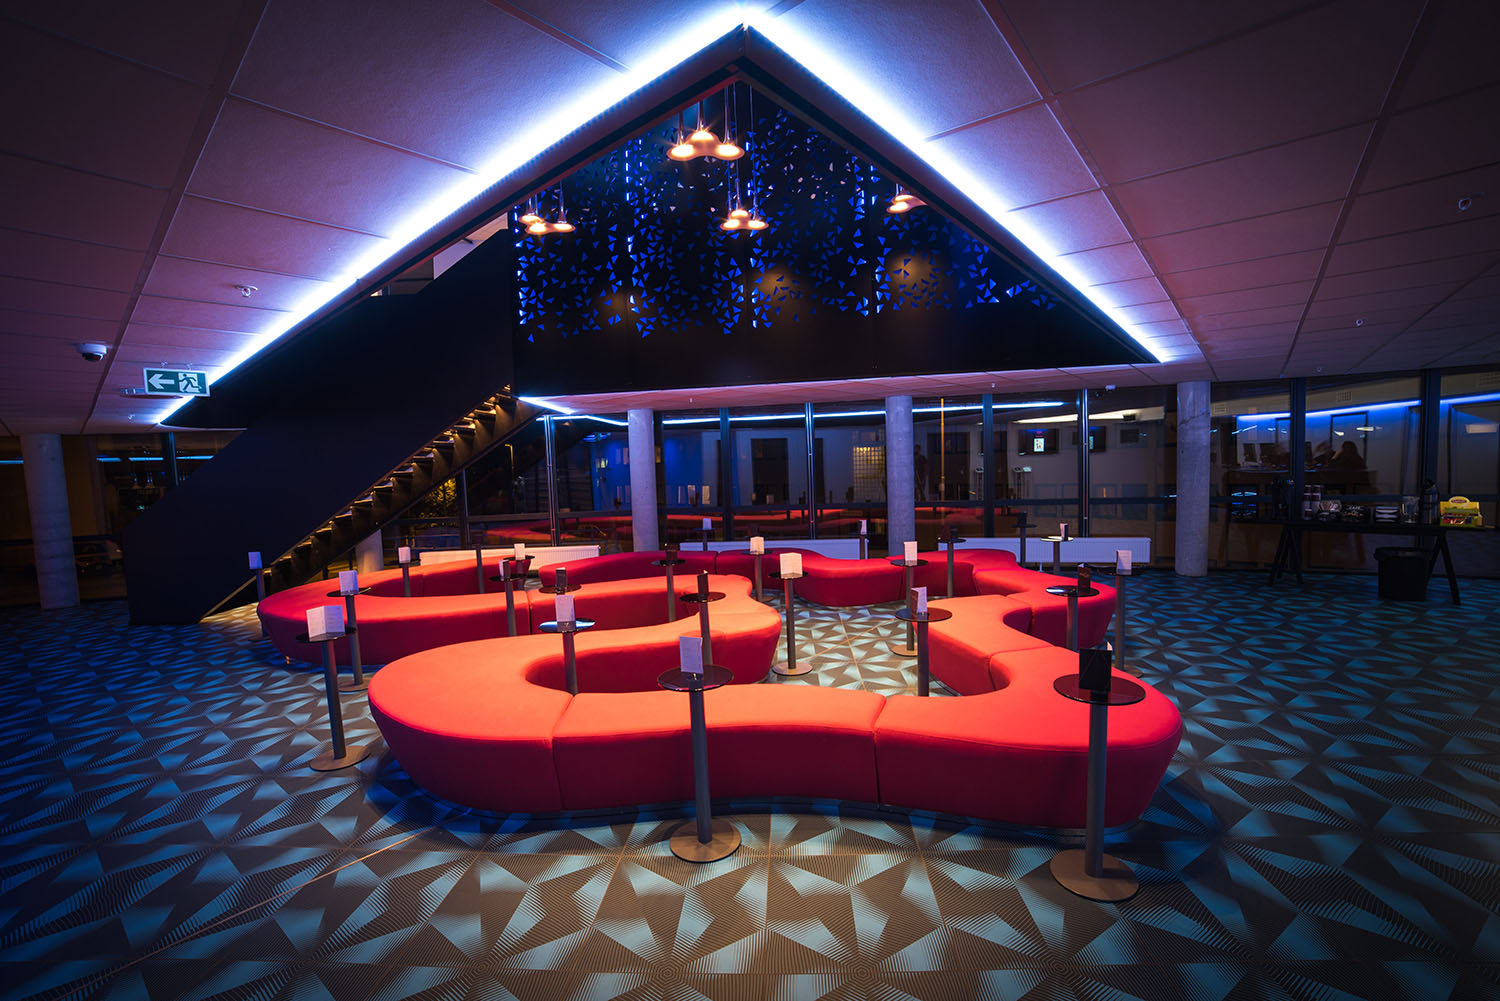 Magic Hotel Bergen Norvegia: Axo Light illumina la hall con le lampade Nafir, le foto